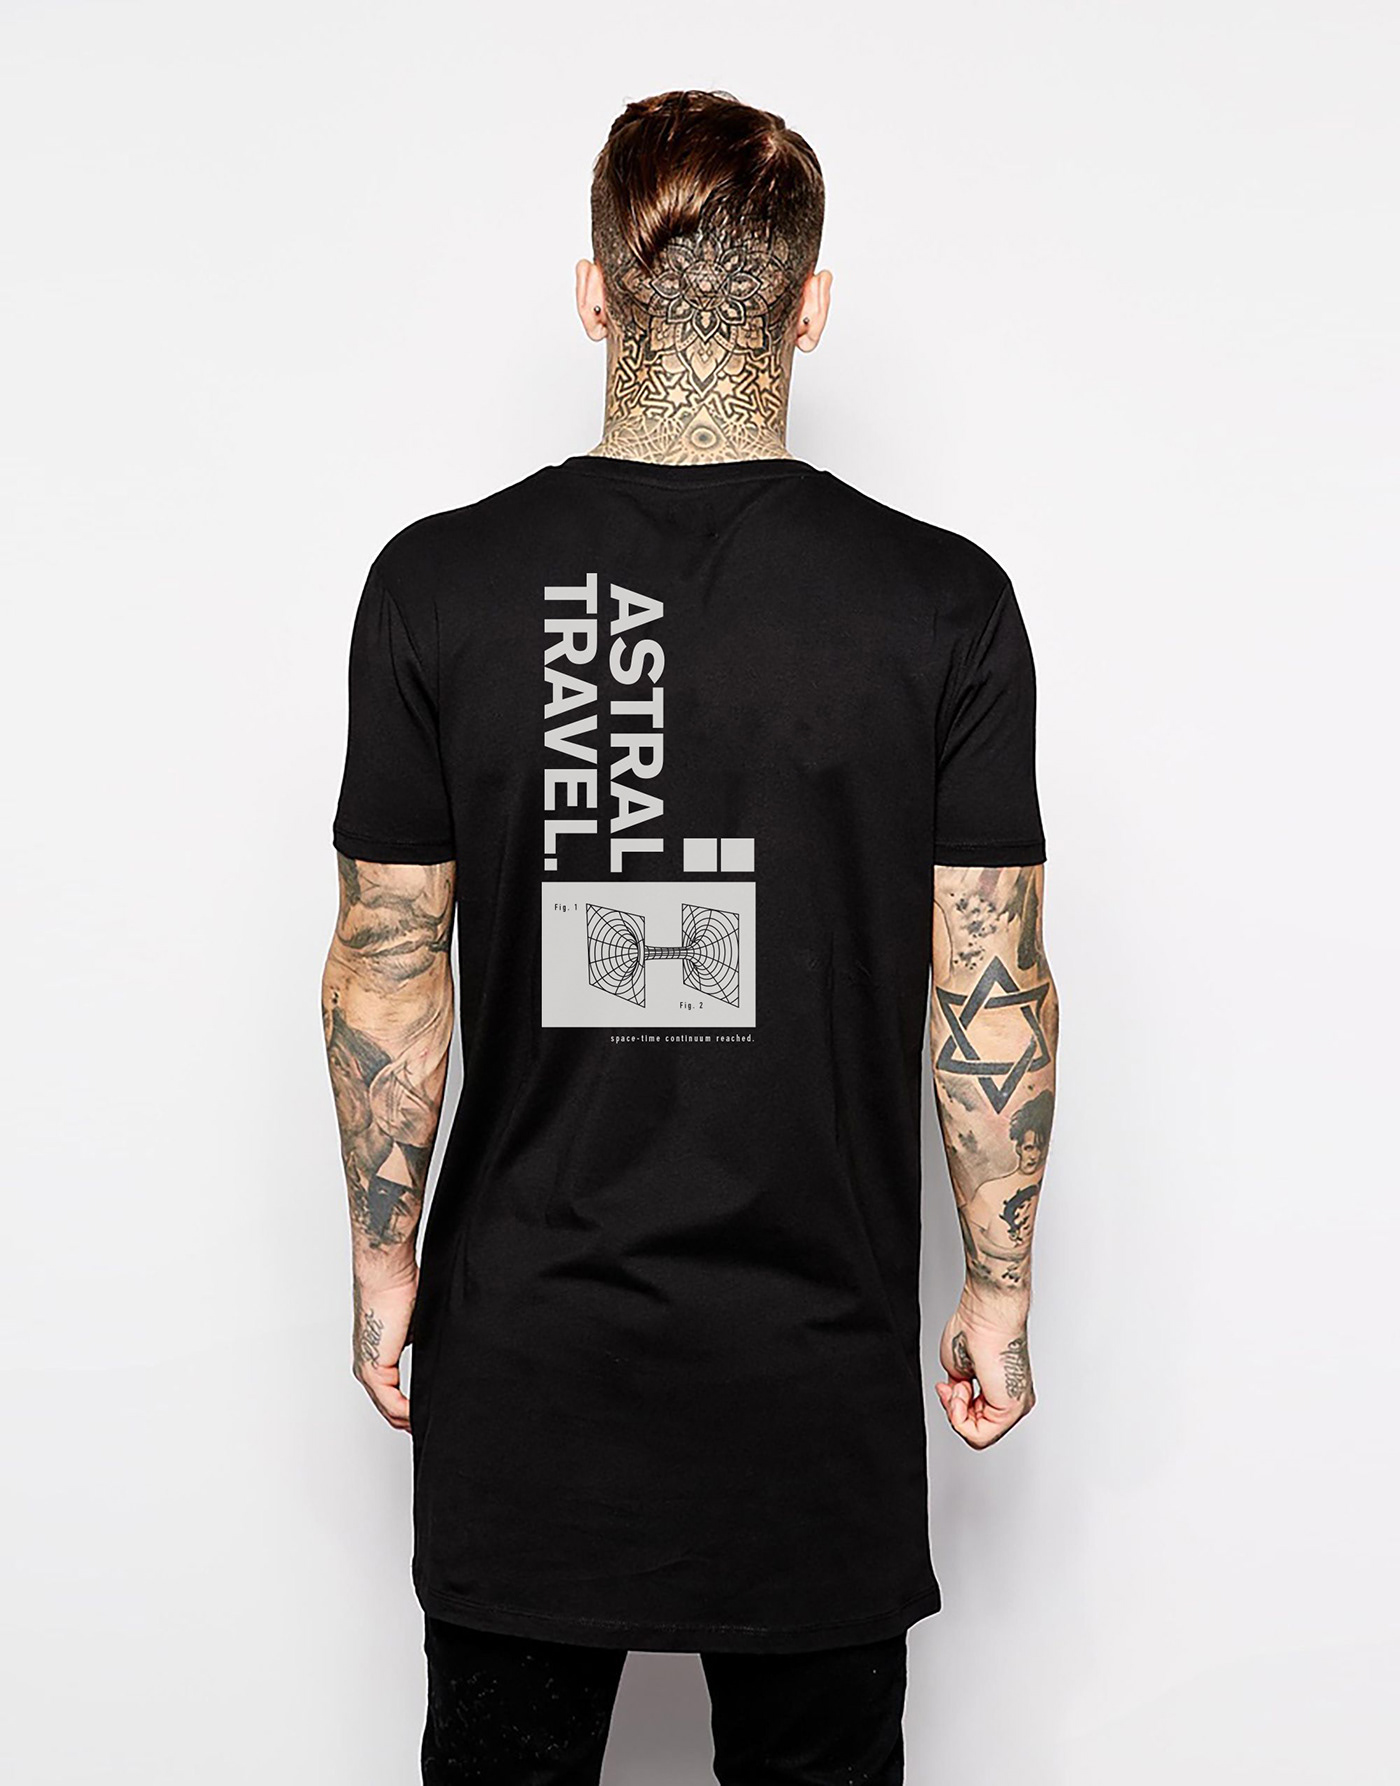 apparel streetwear technical brand Urban Clothing t-shirt